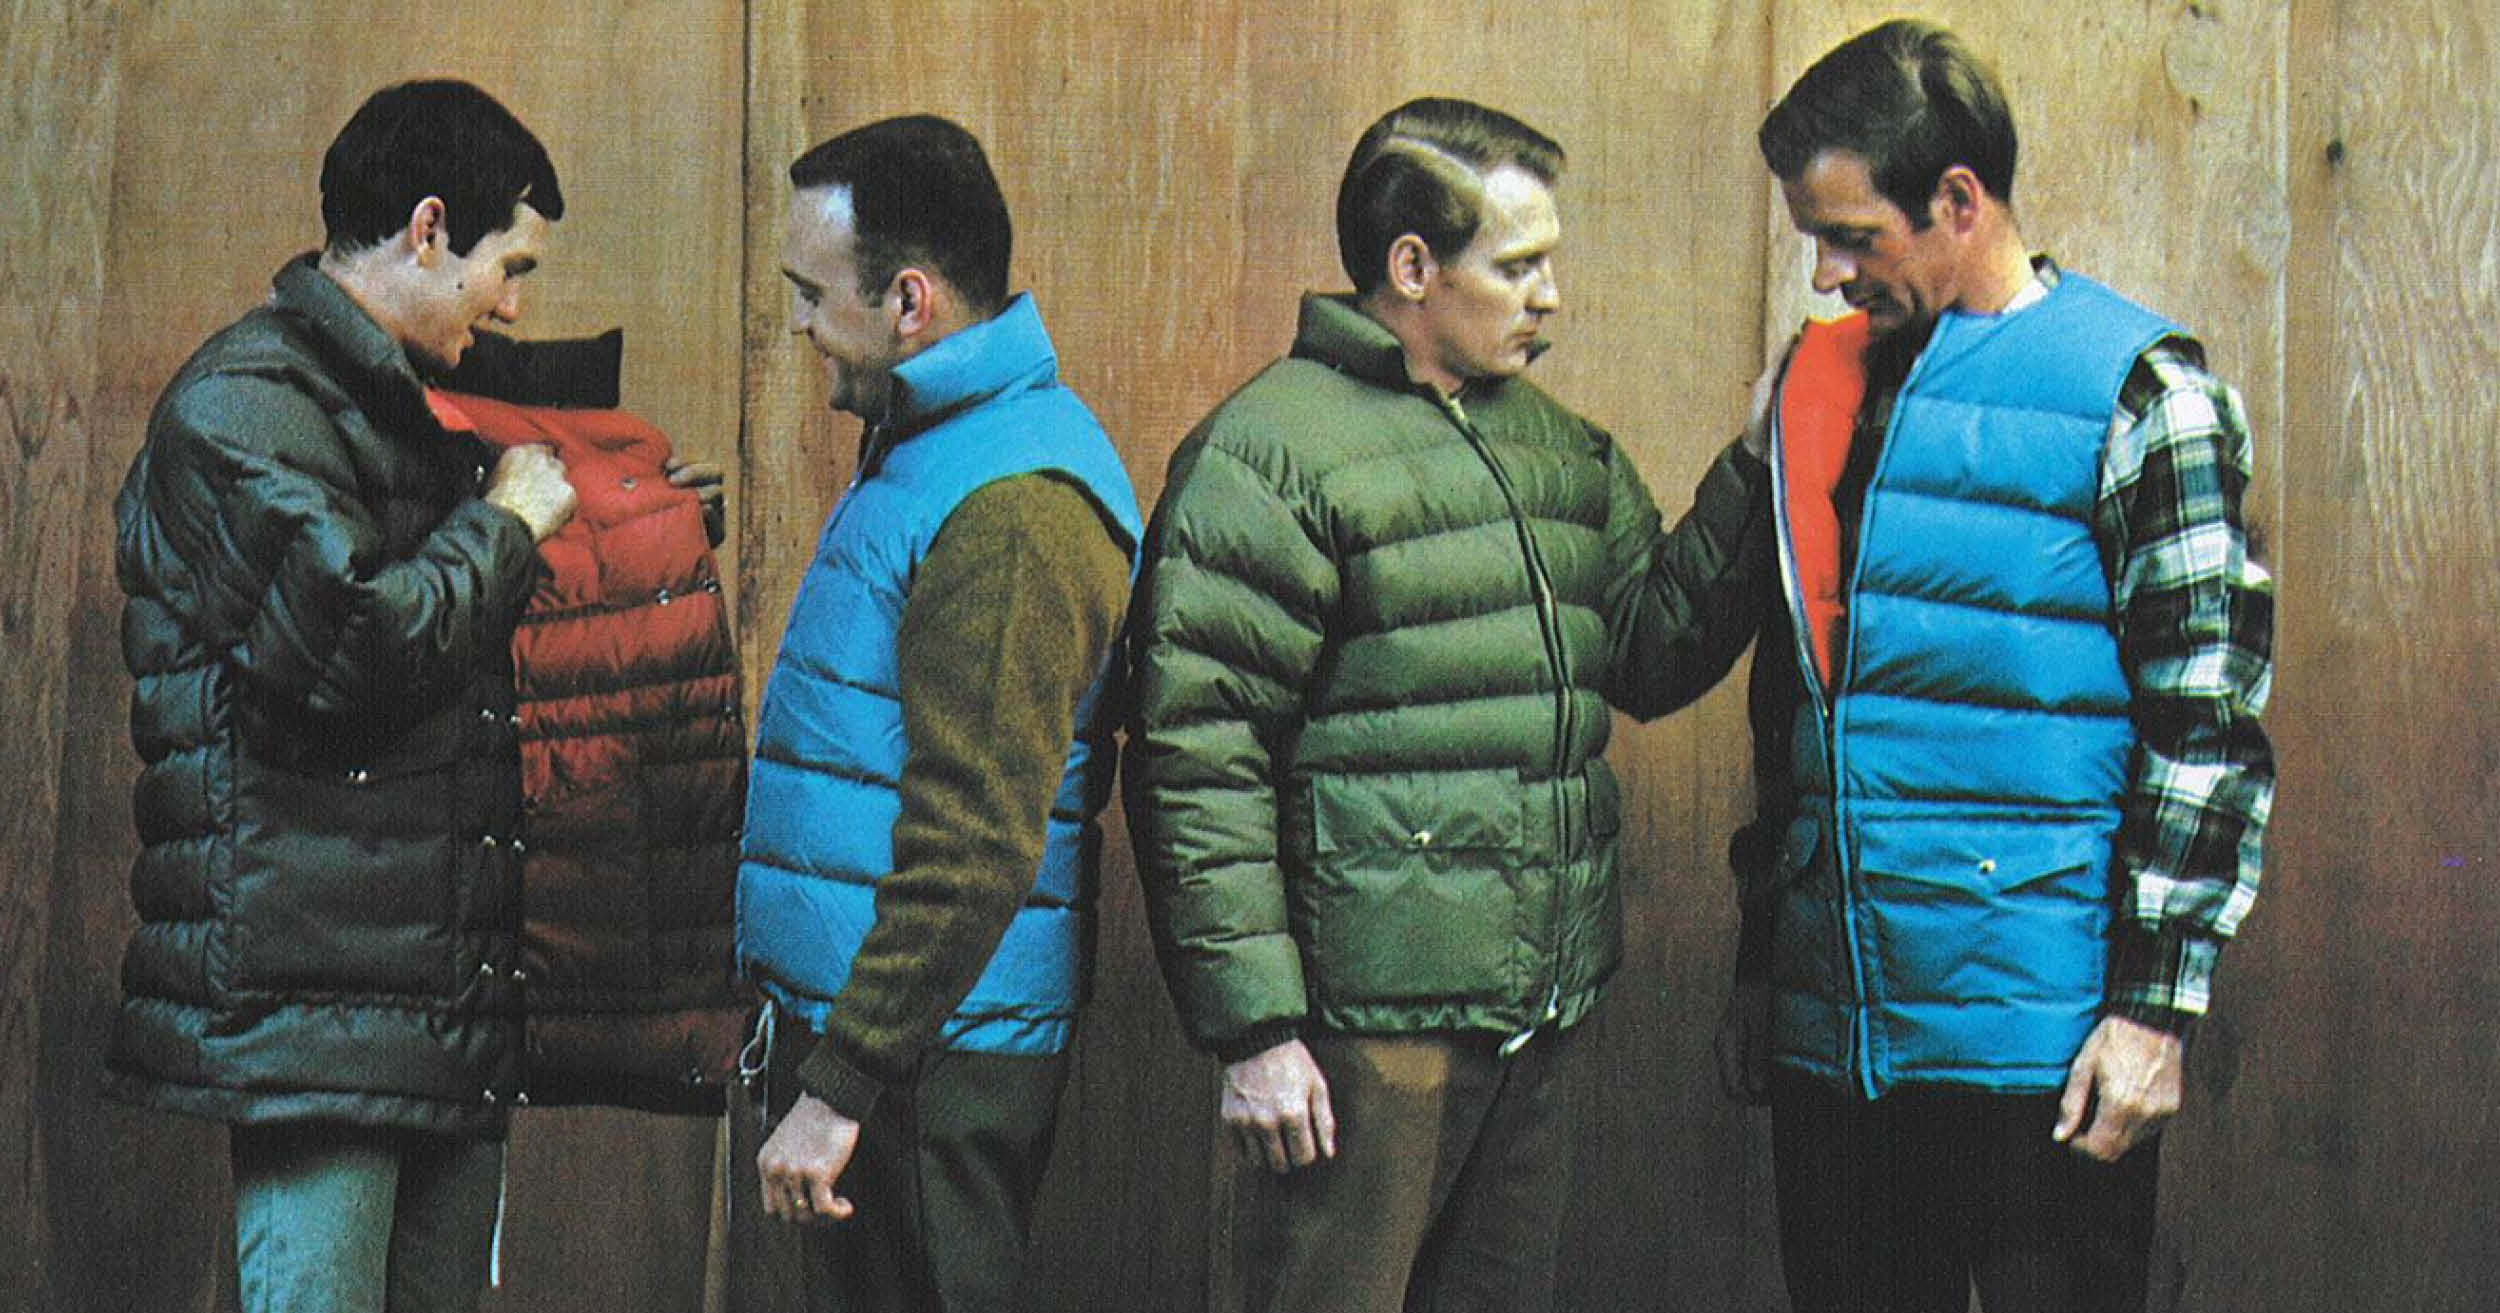 Atoms & Molecules Men's Heavy Cotton Jacket Fleece Lining 